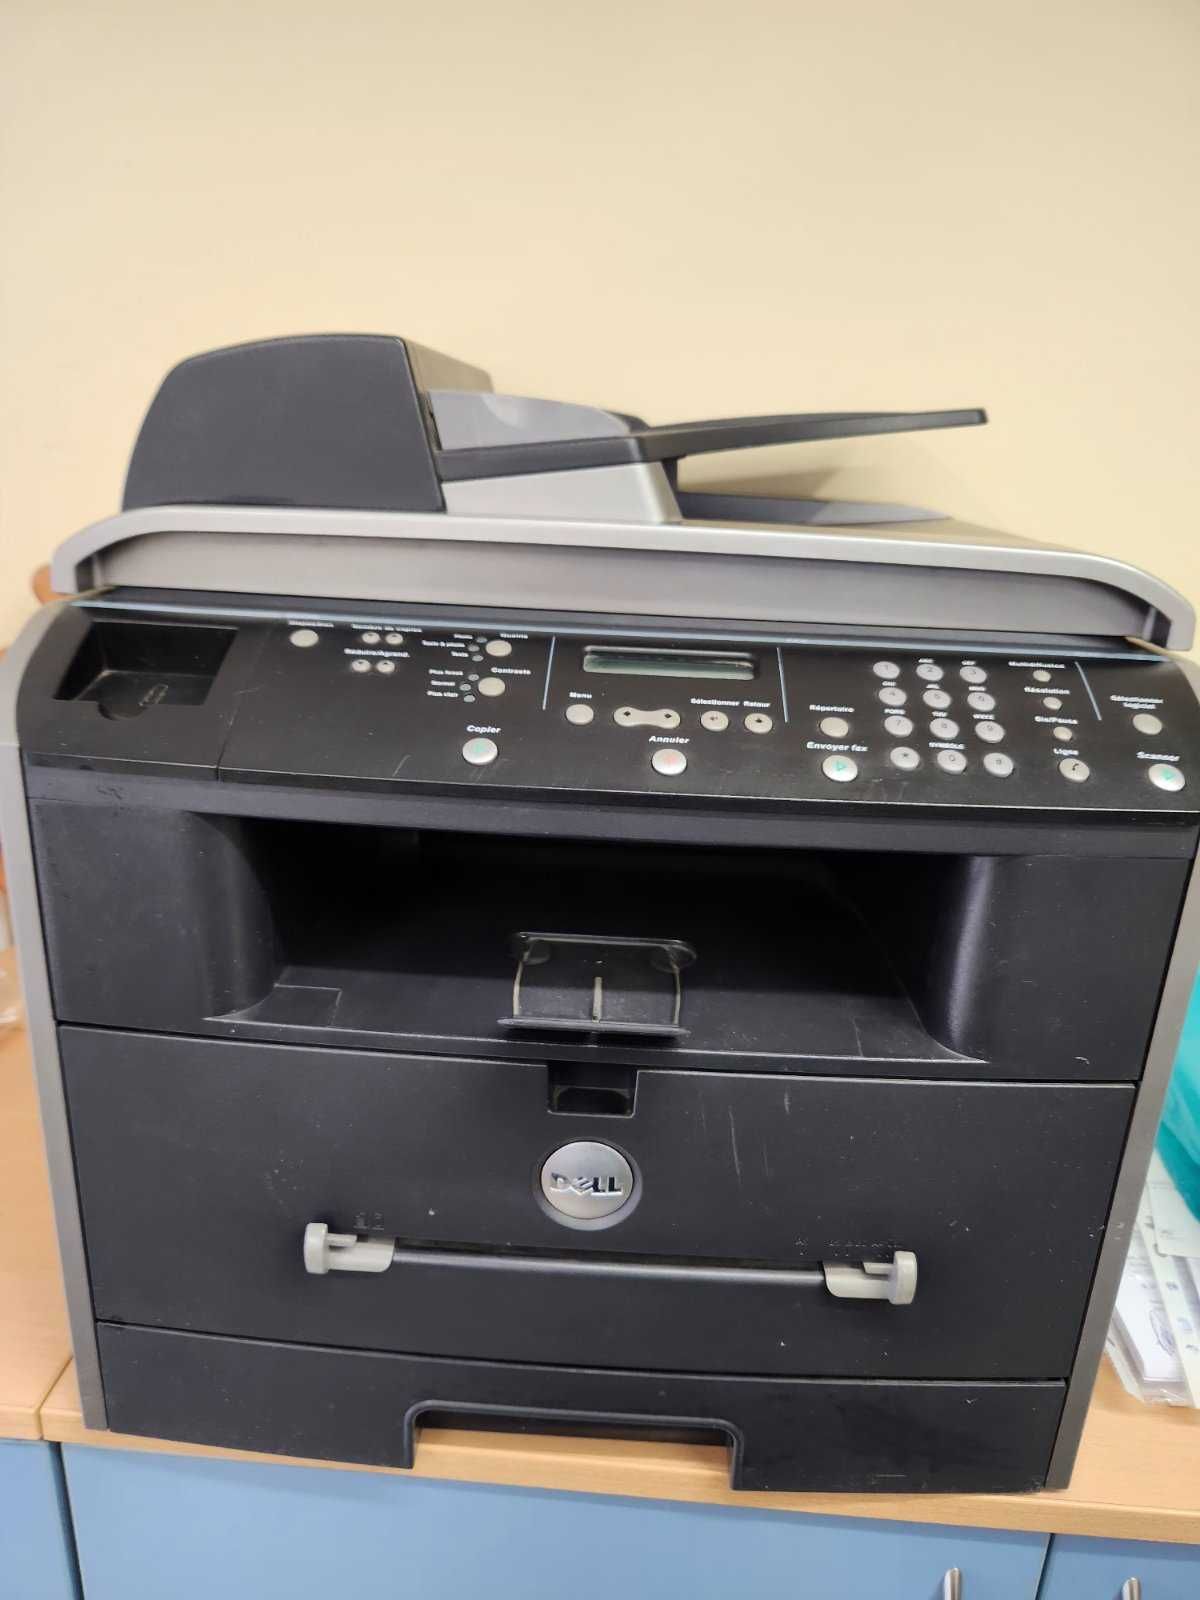 Продавам лазарен принтер/копир/скенер Dell 1600n - 99 лв